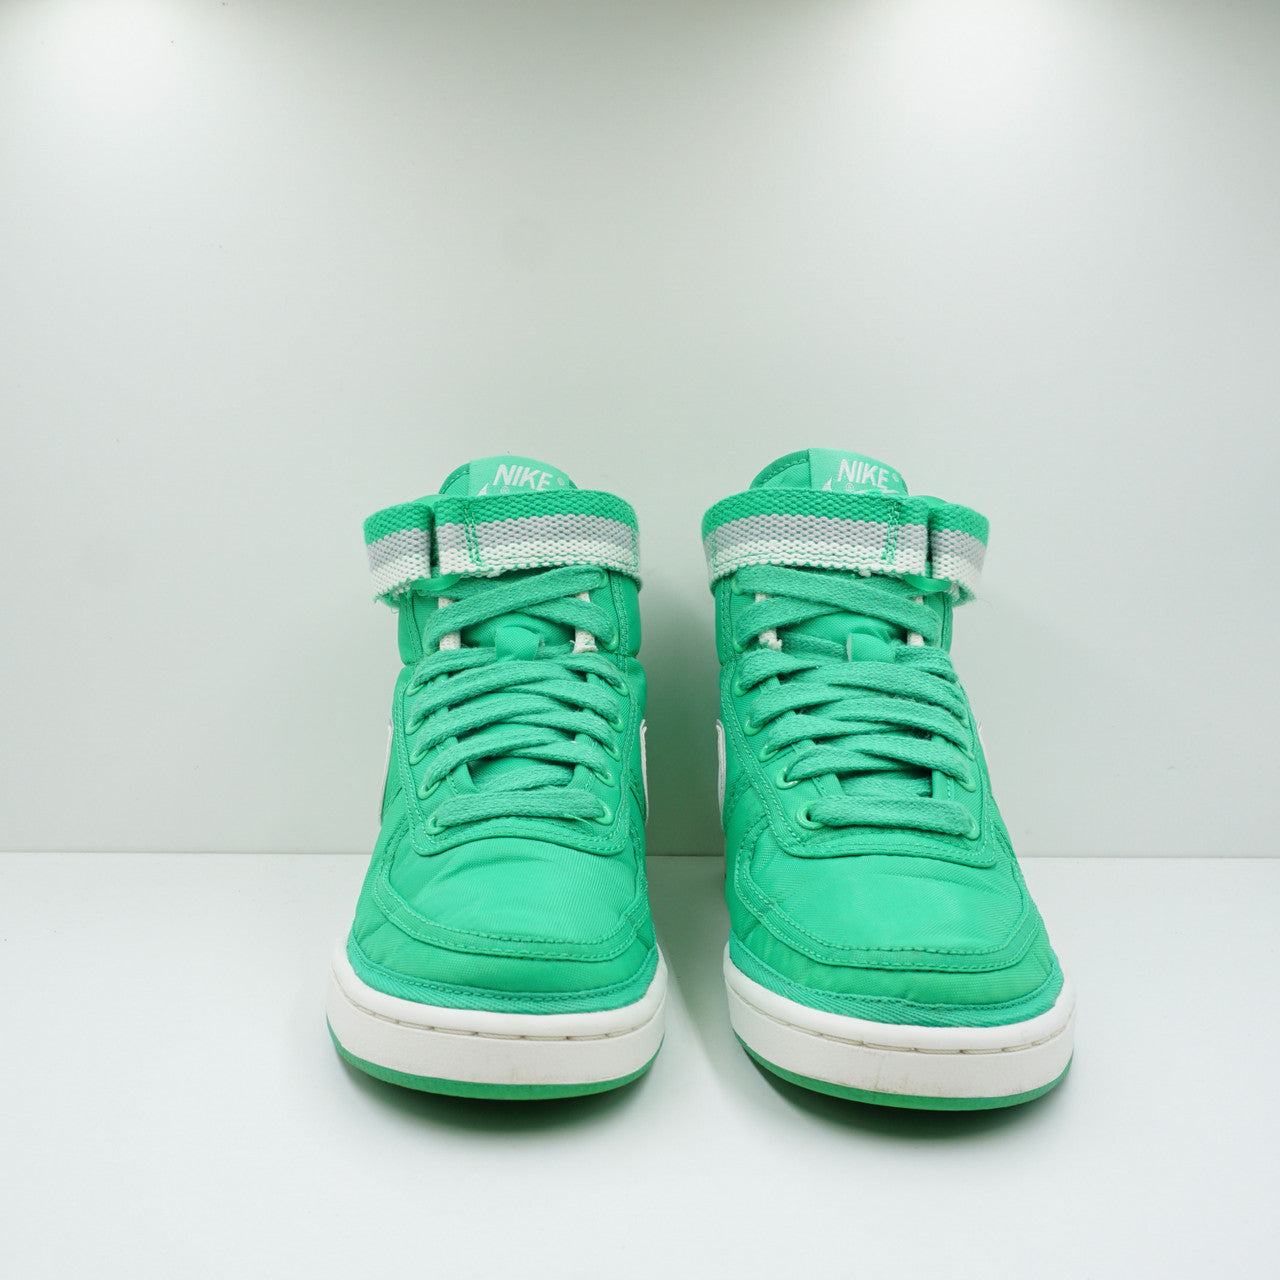 Nike Vandal High Supreme Green (VNTG)